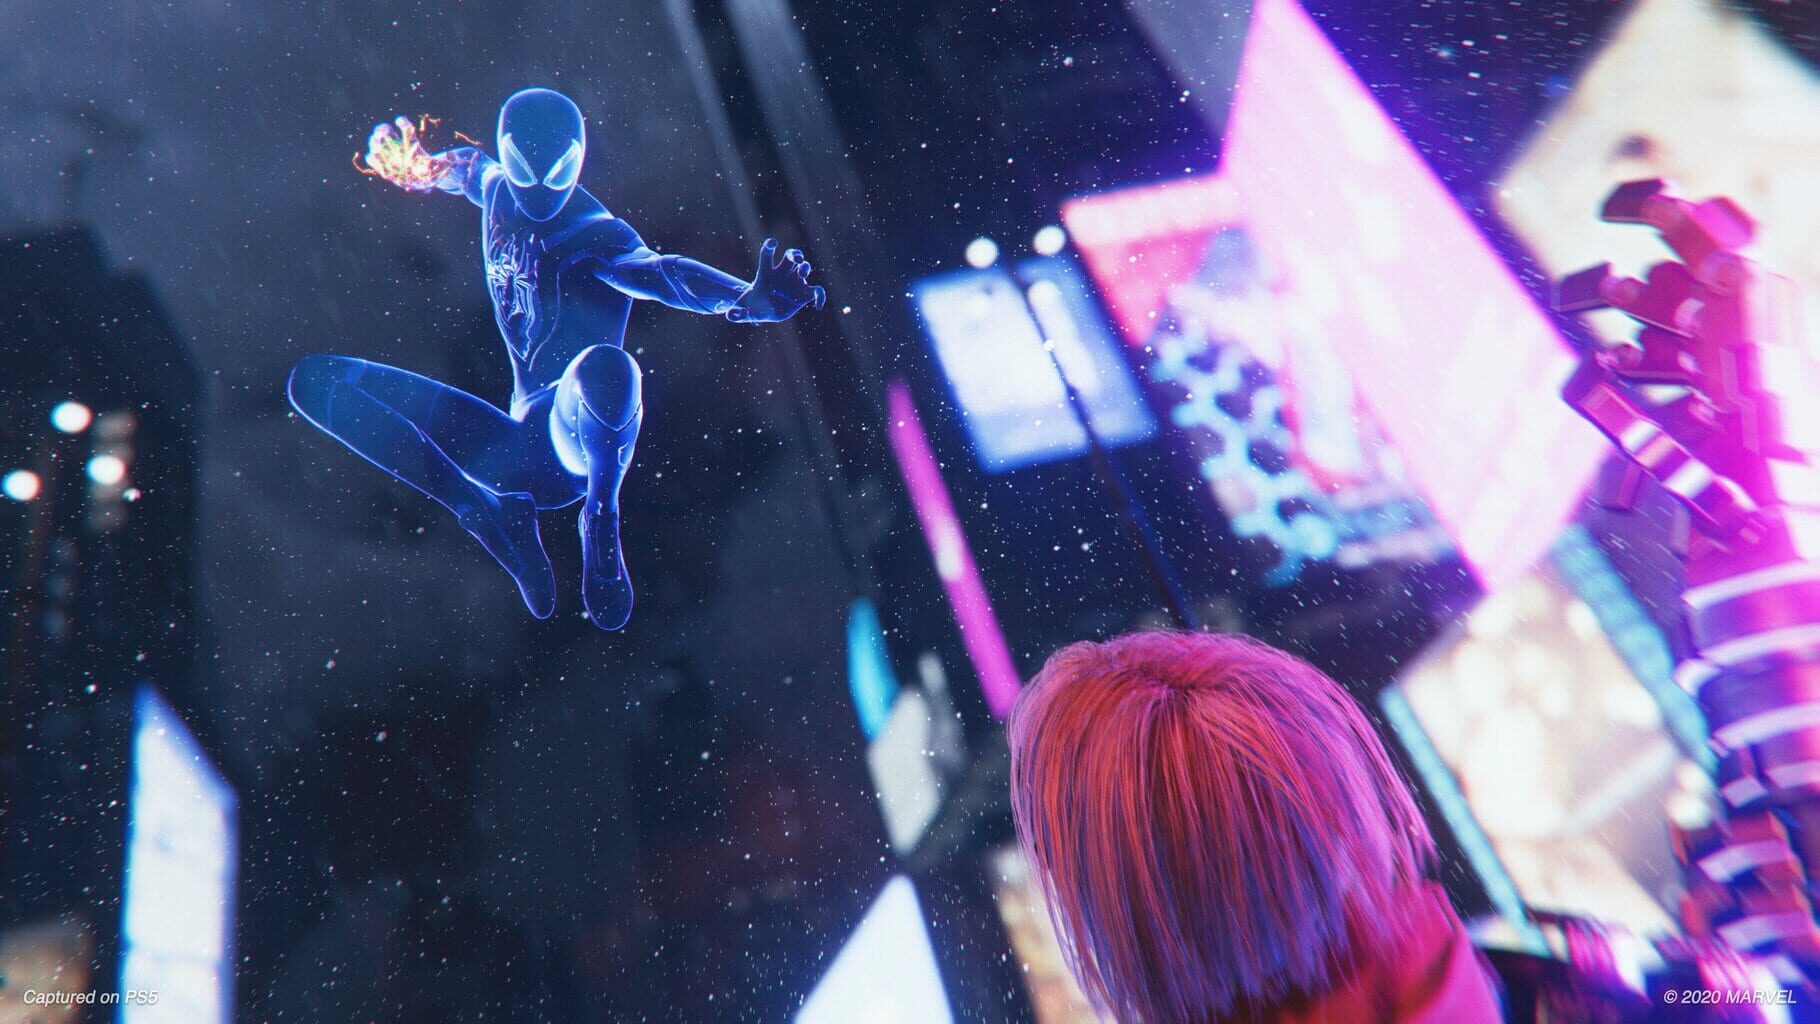 Marvel's Spider-Man: Miles Morales screenshots